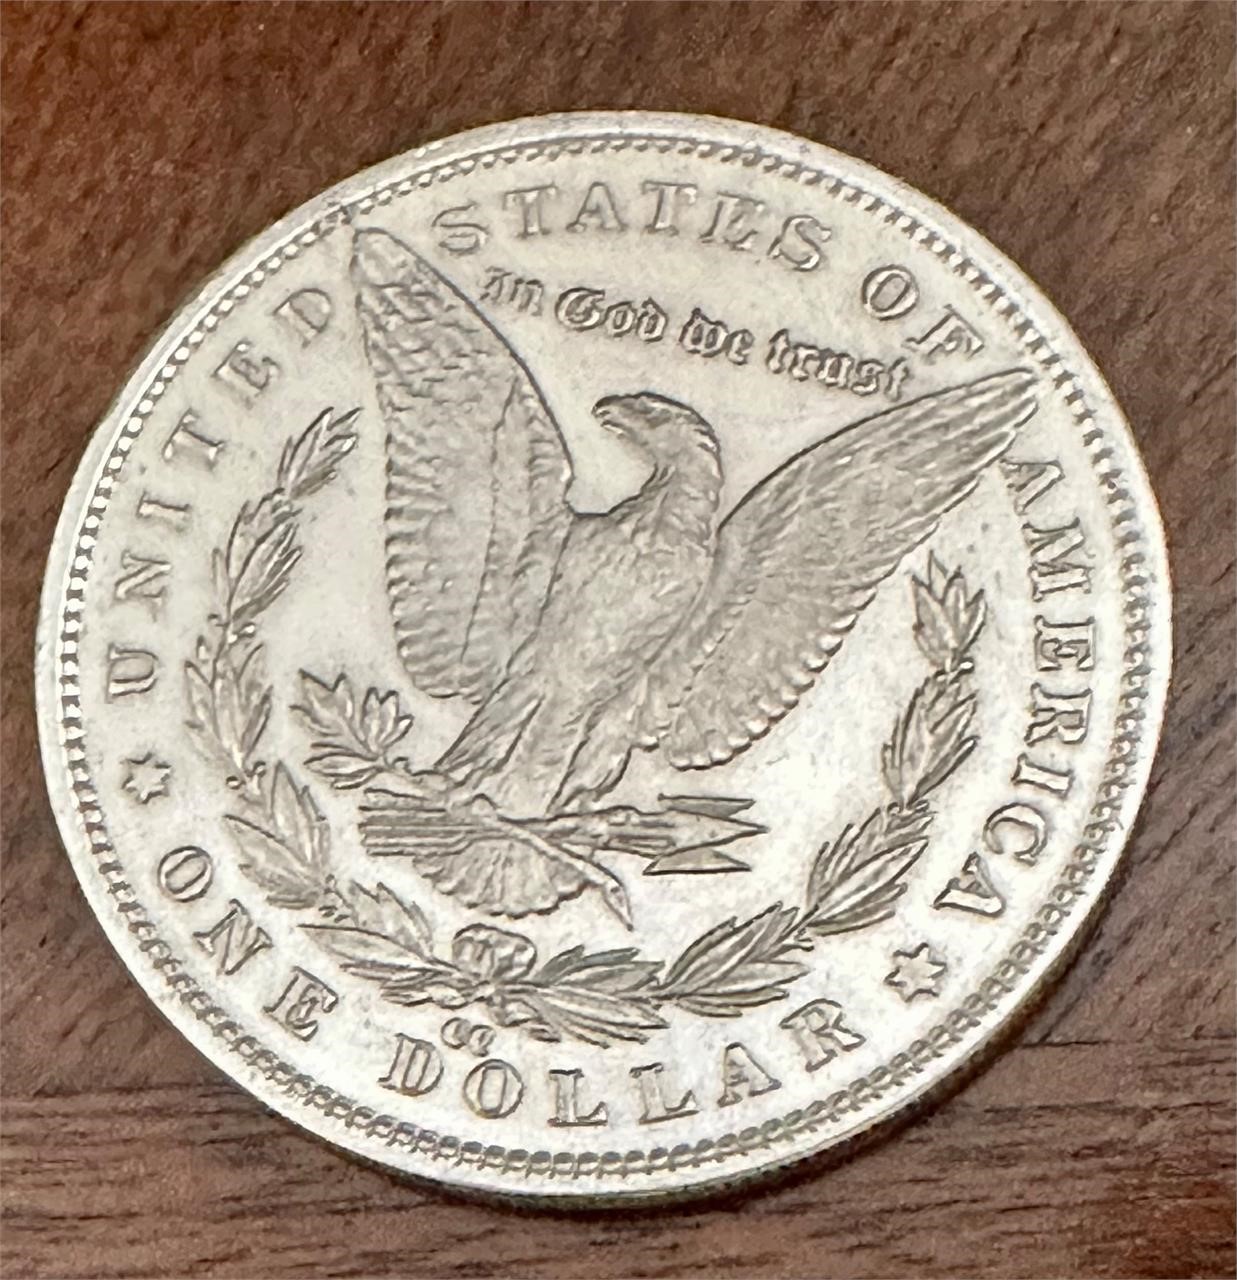 Rare Coin Auction 4 - North Texas